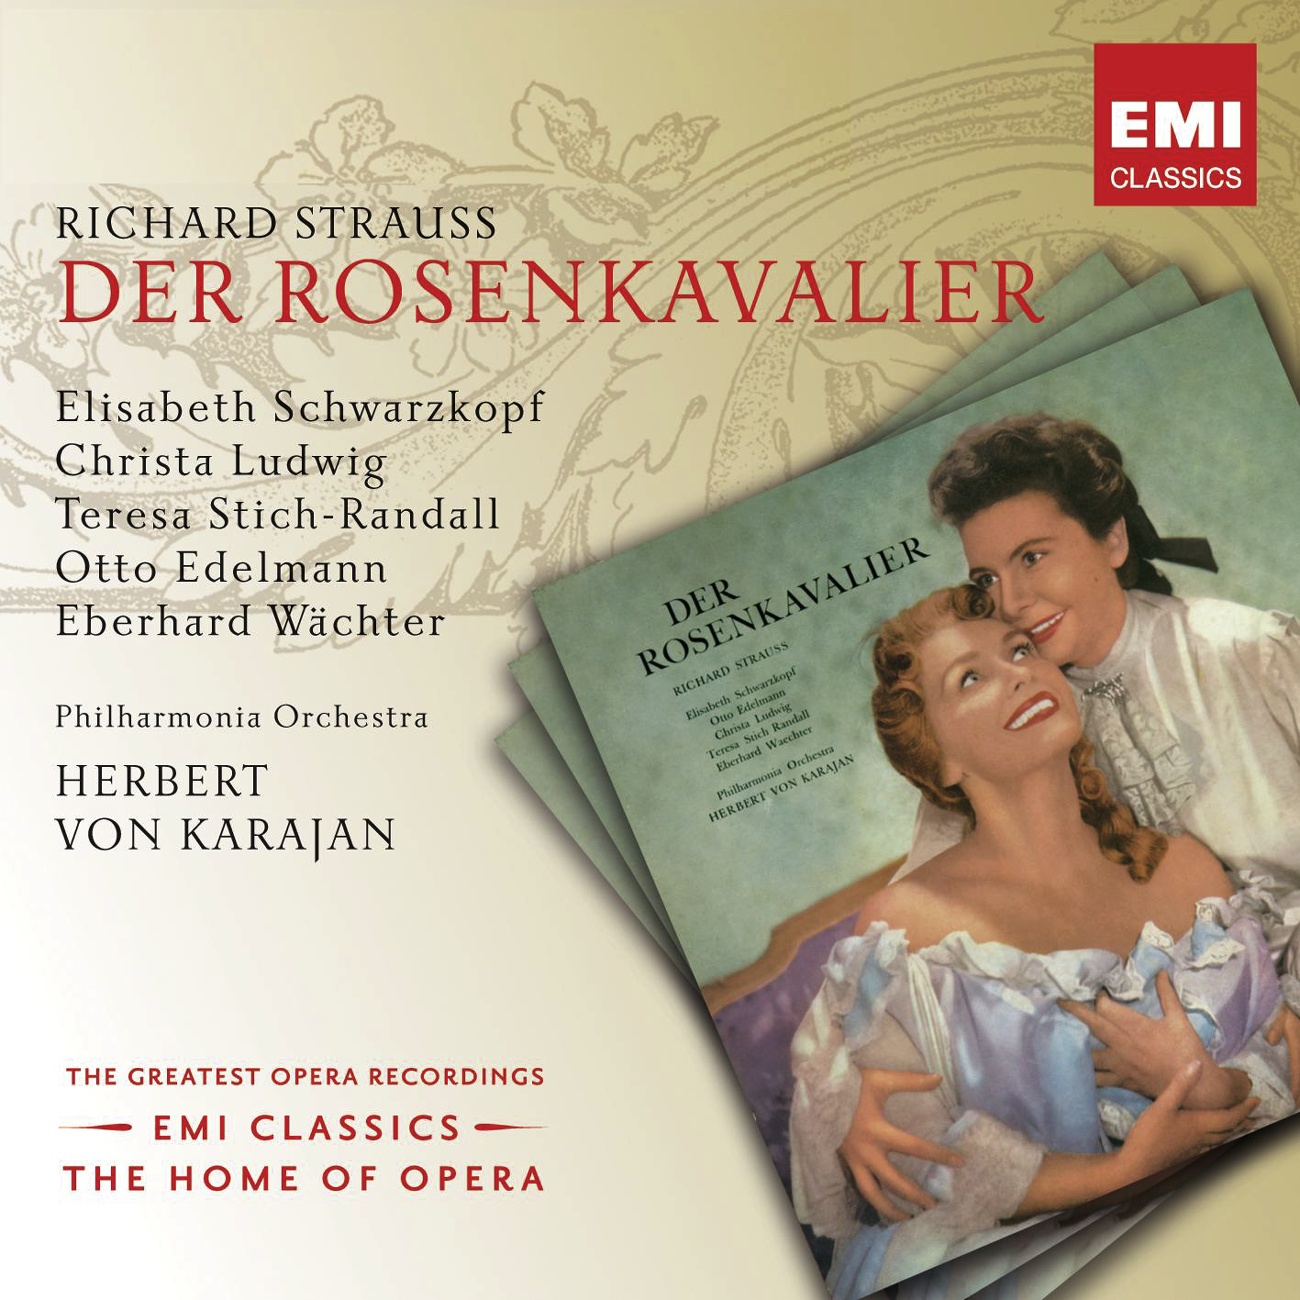 Der Rosenkavalier (2001 Digital Remaster), Act III: Hab'n Euer gnaden noch weitre Befehle? (Wirt/Kellner/Ochs)